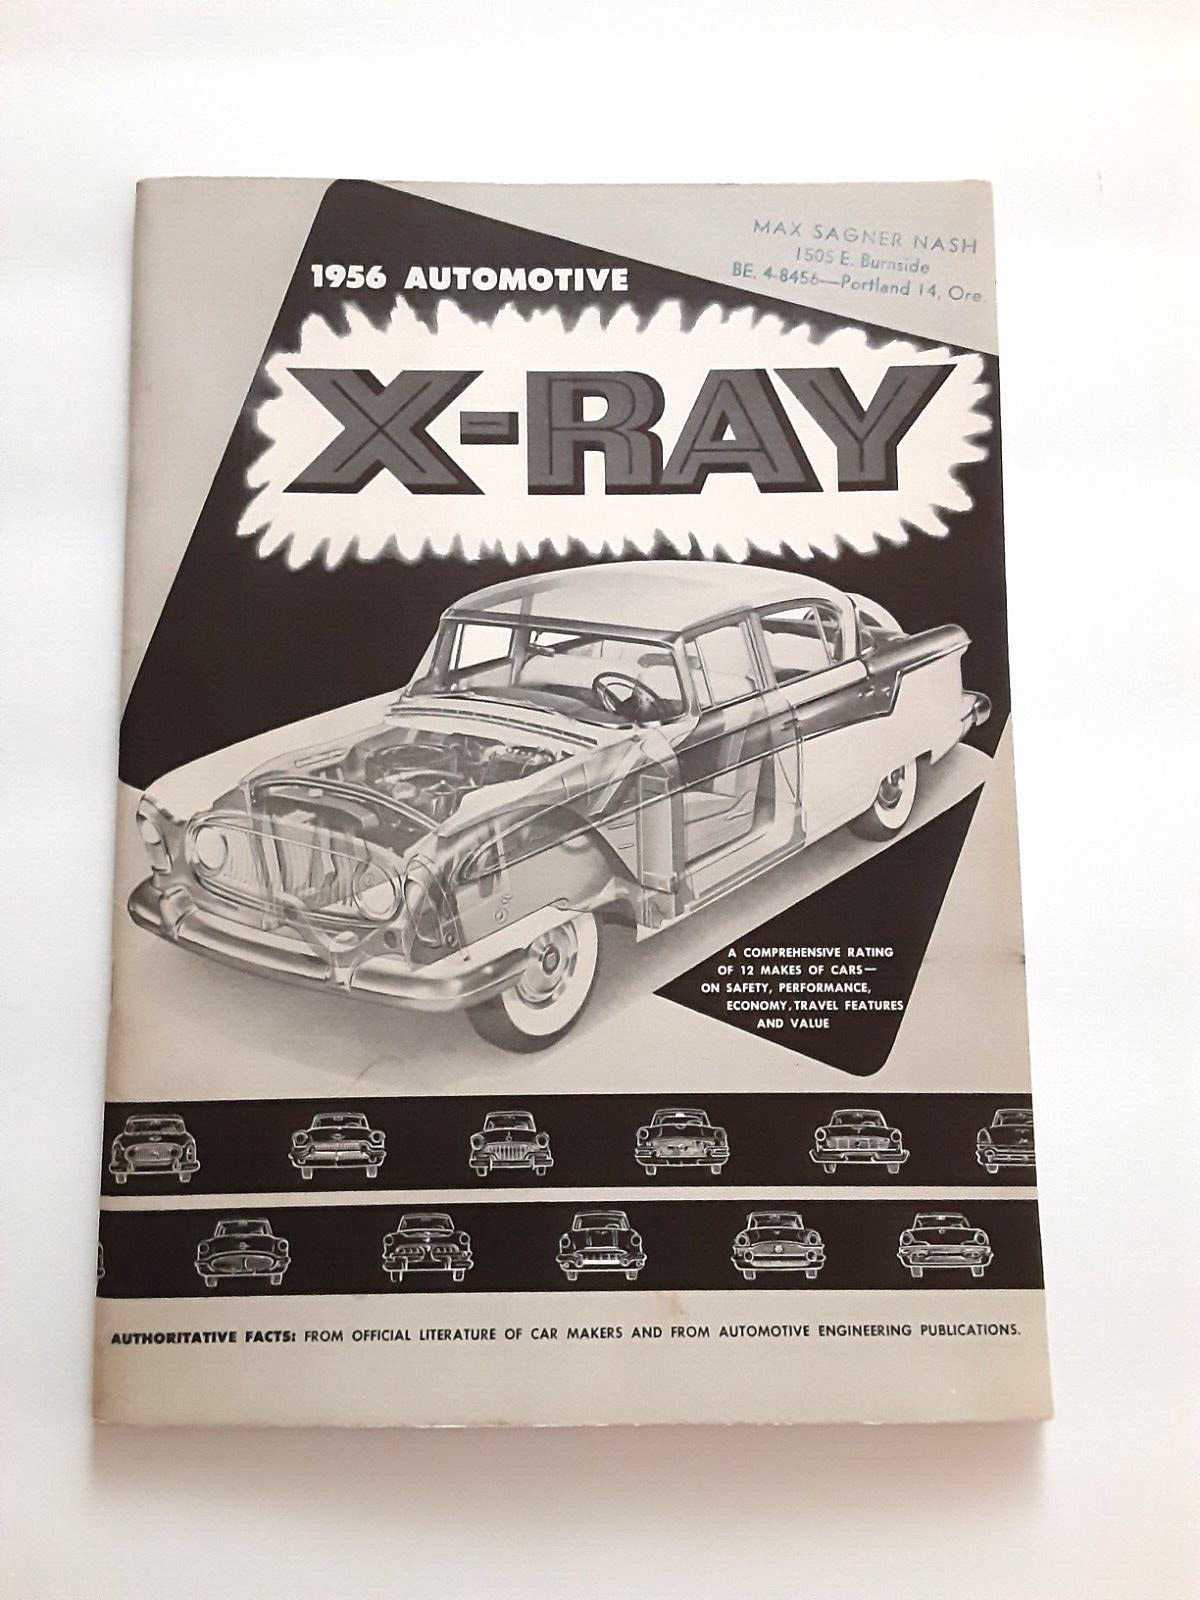 Nash Automobile Advertising Brochure 1956 Automotive X-Ray AMC.